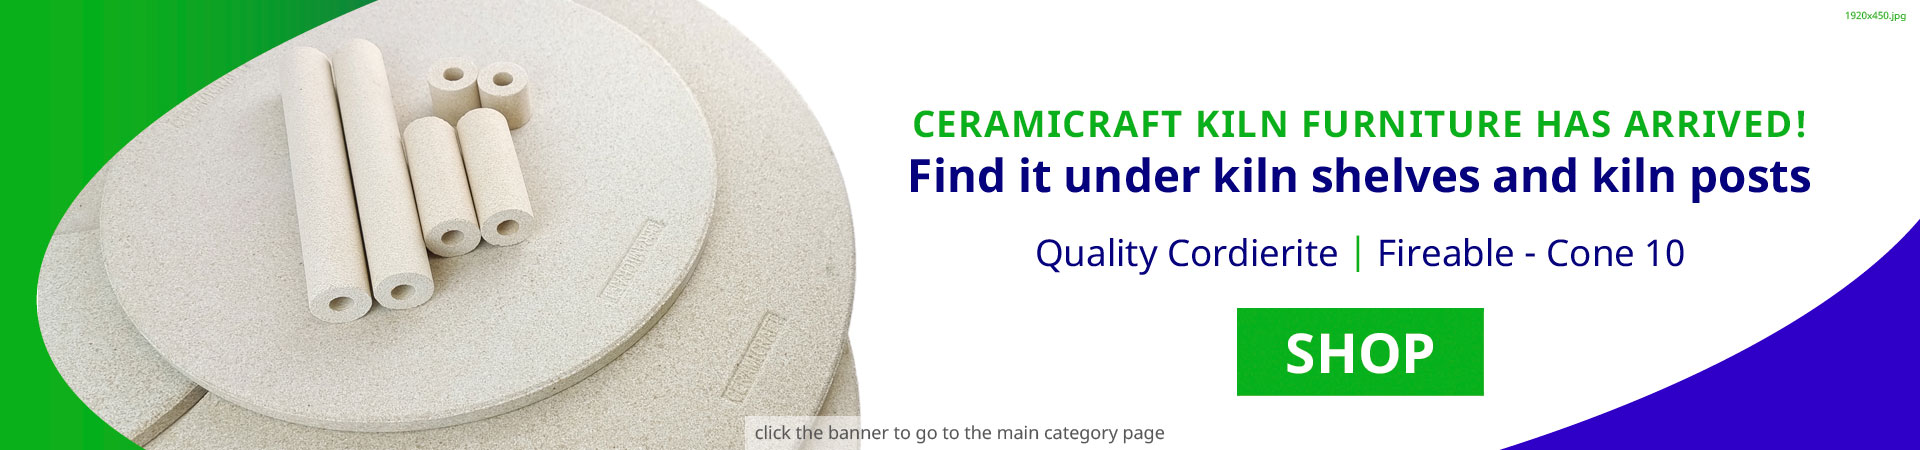 NEW Ceramicraft Kiln furniture has arrived!